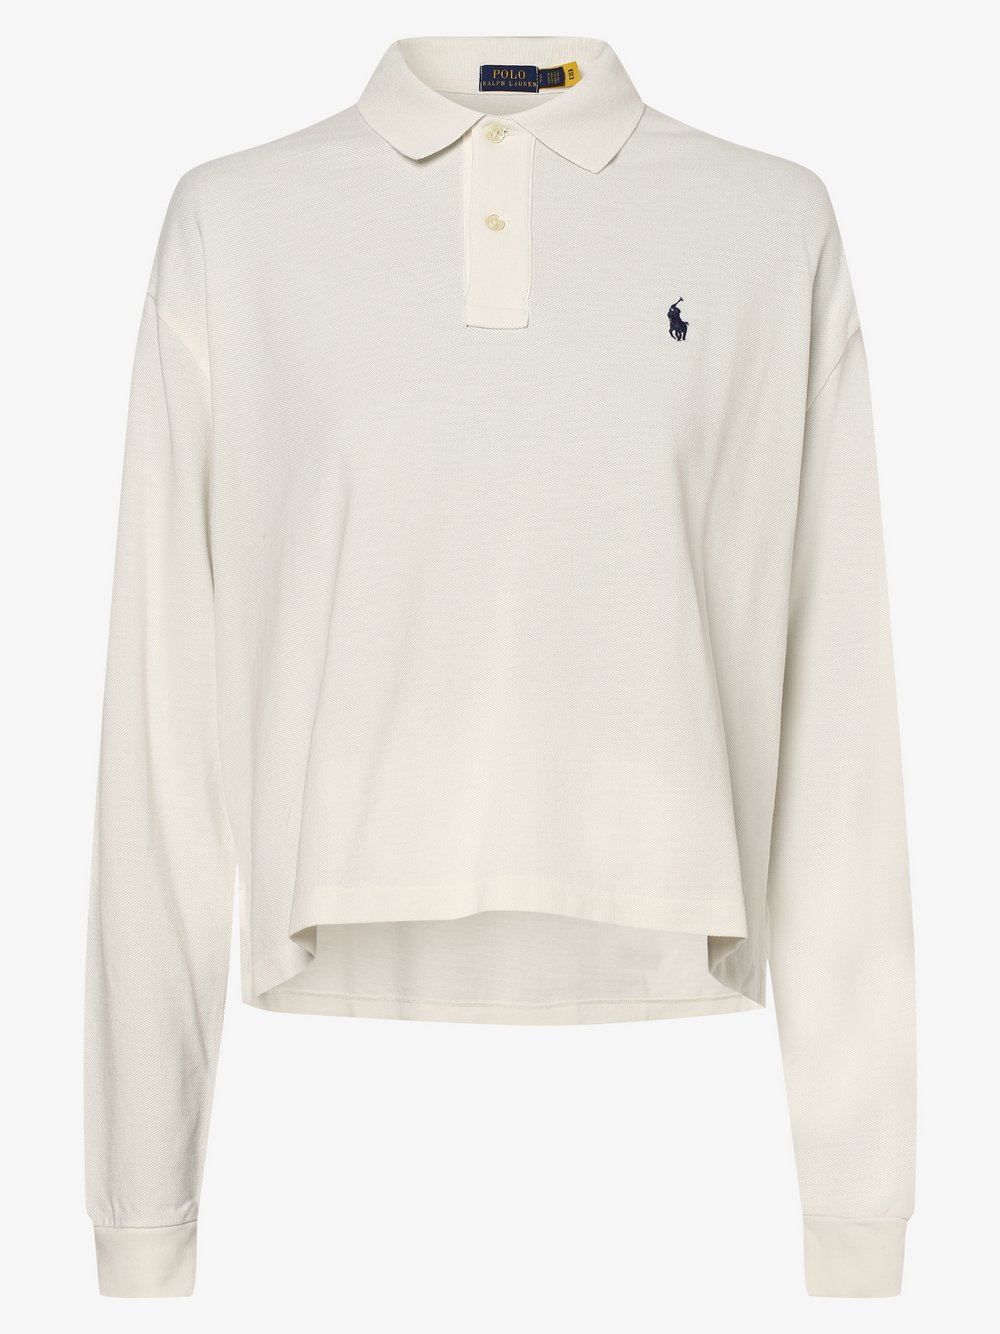 Polo Ralph Lauren - Damska koszulka polo, biały